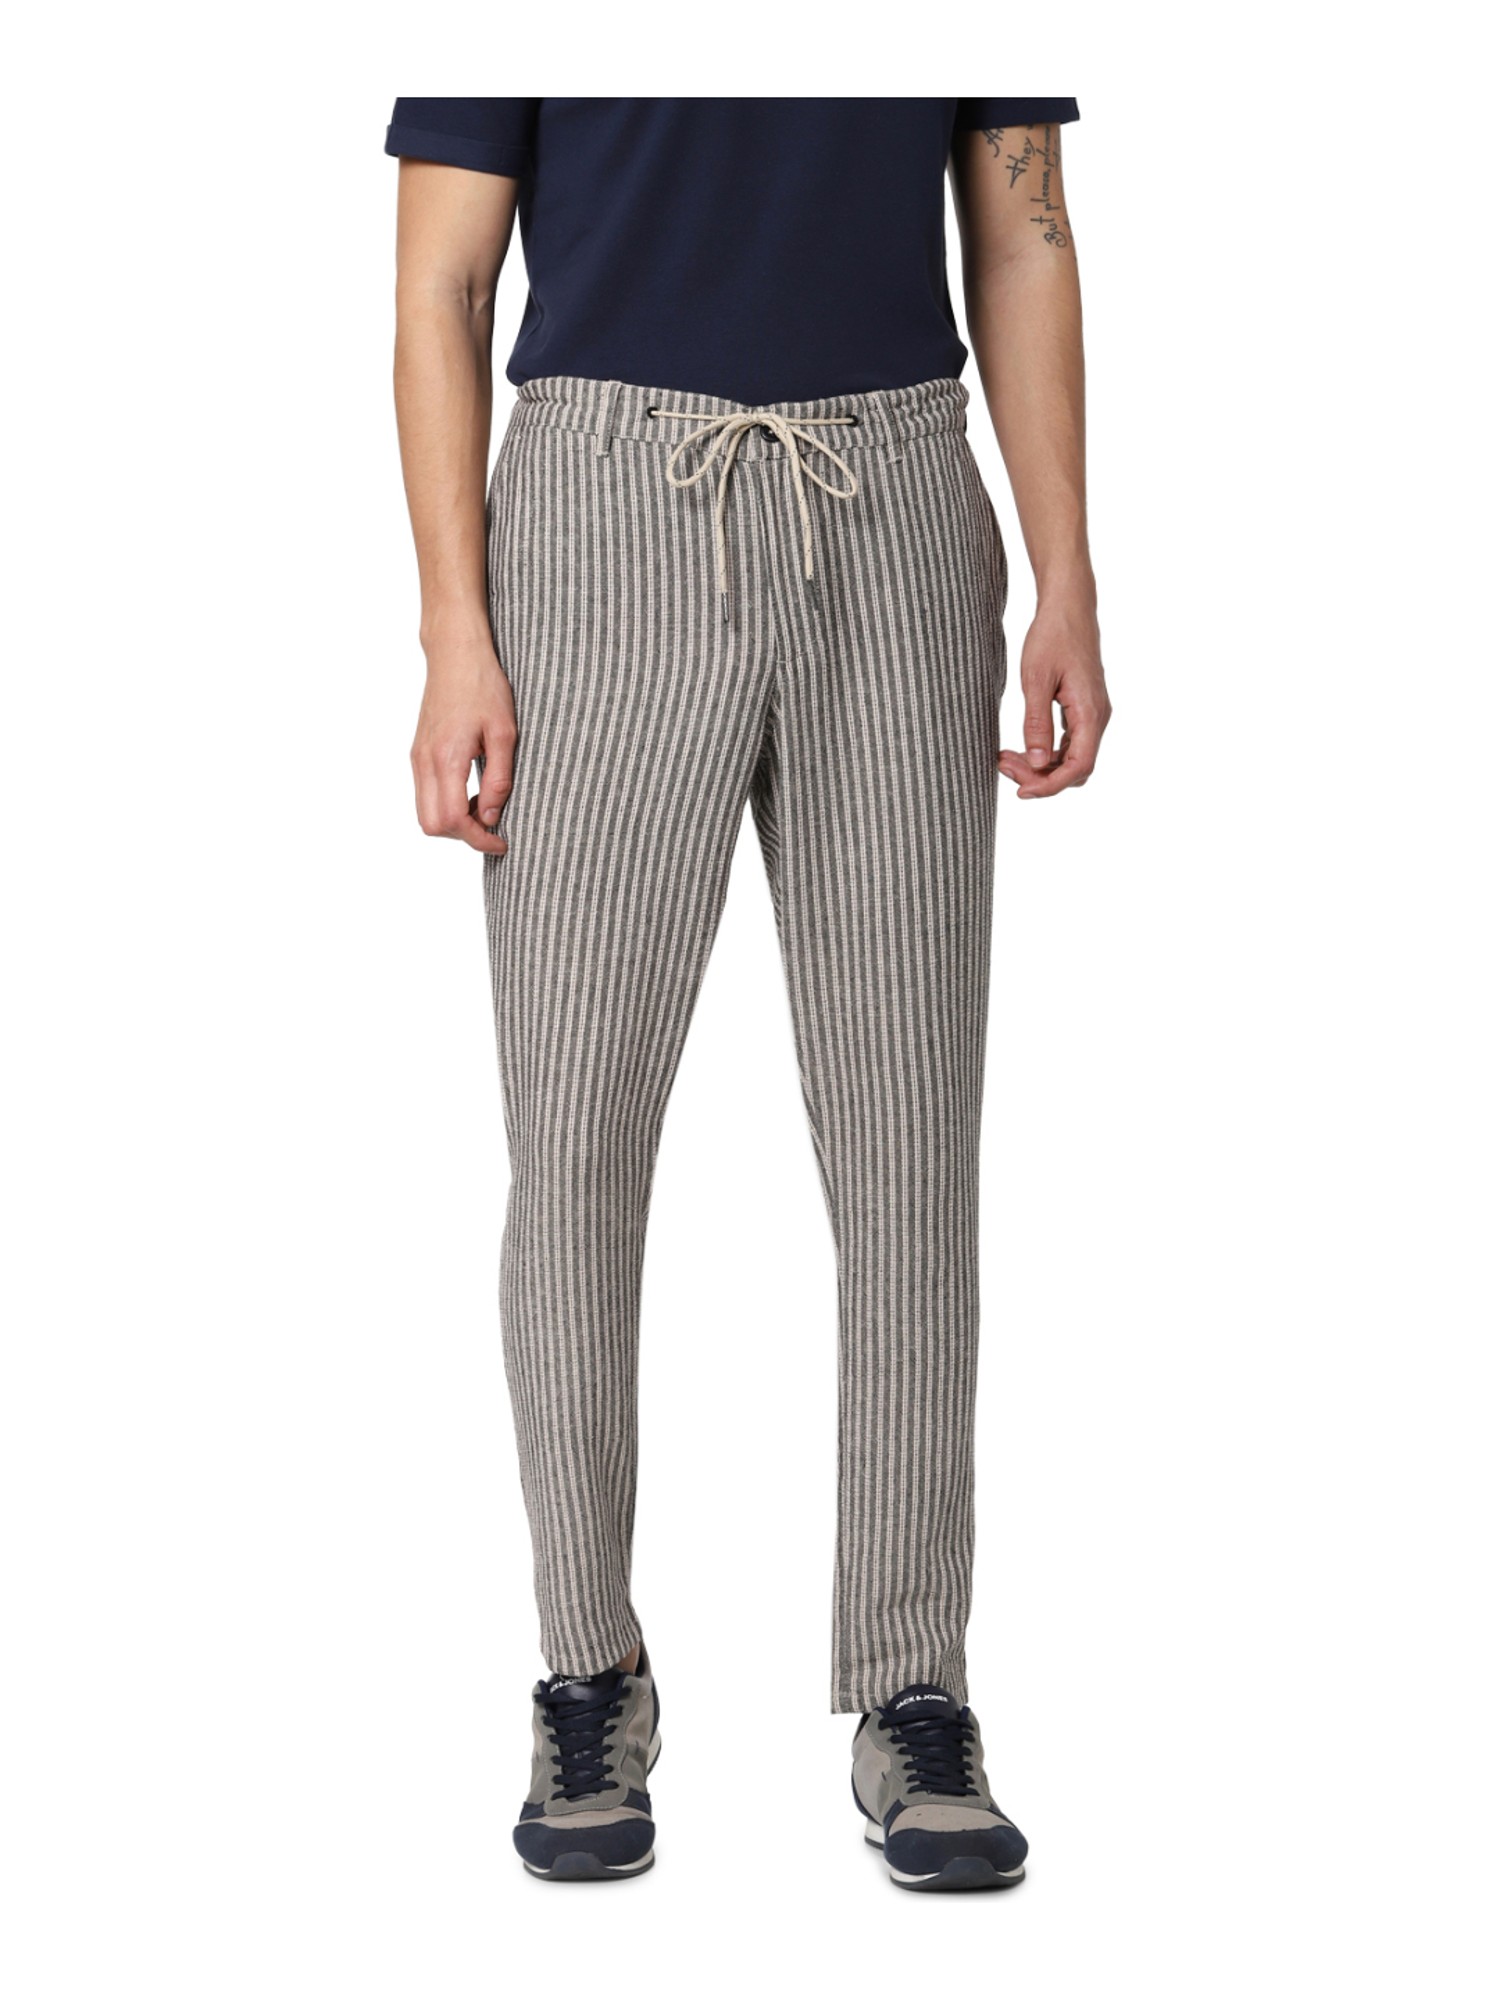 Peter England Black Trousers  Amazonin Fashion